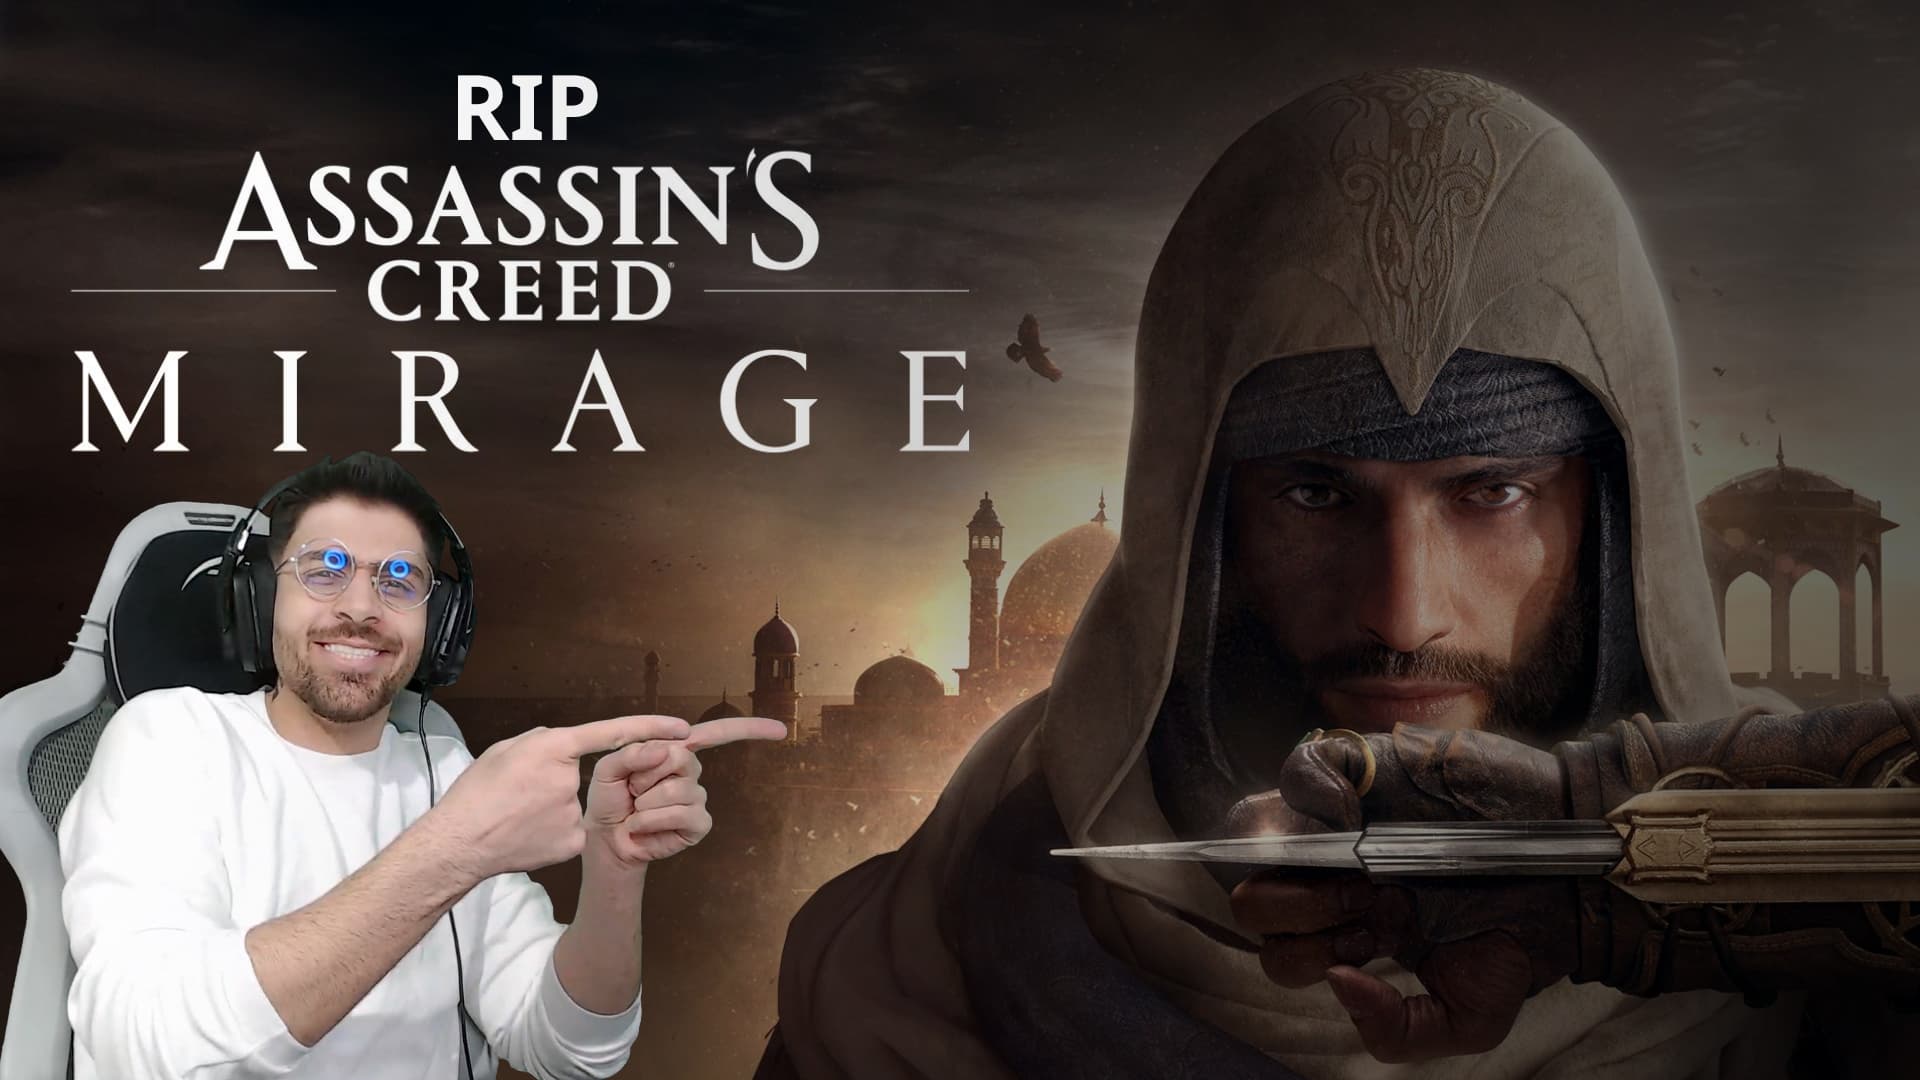 Assassin's Creed Mirage / RIP